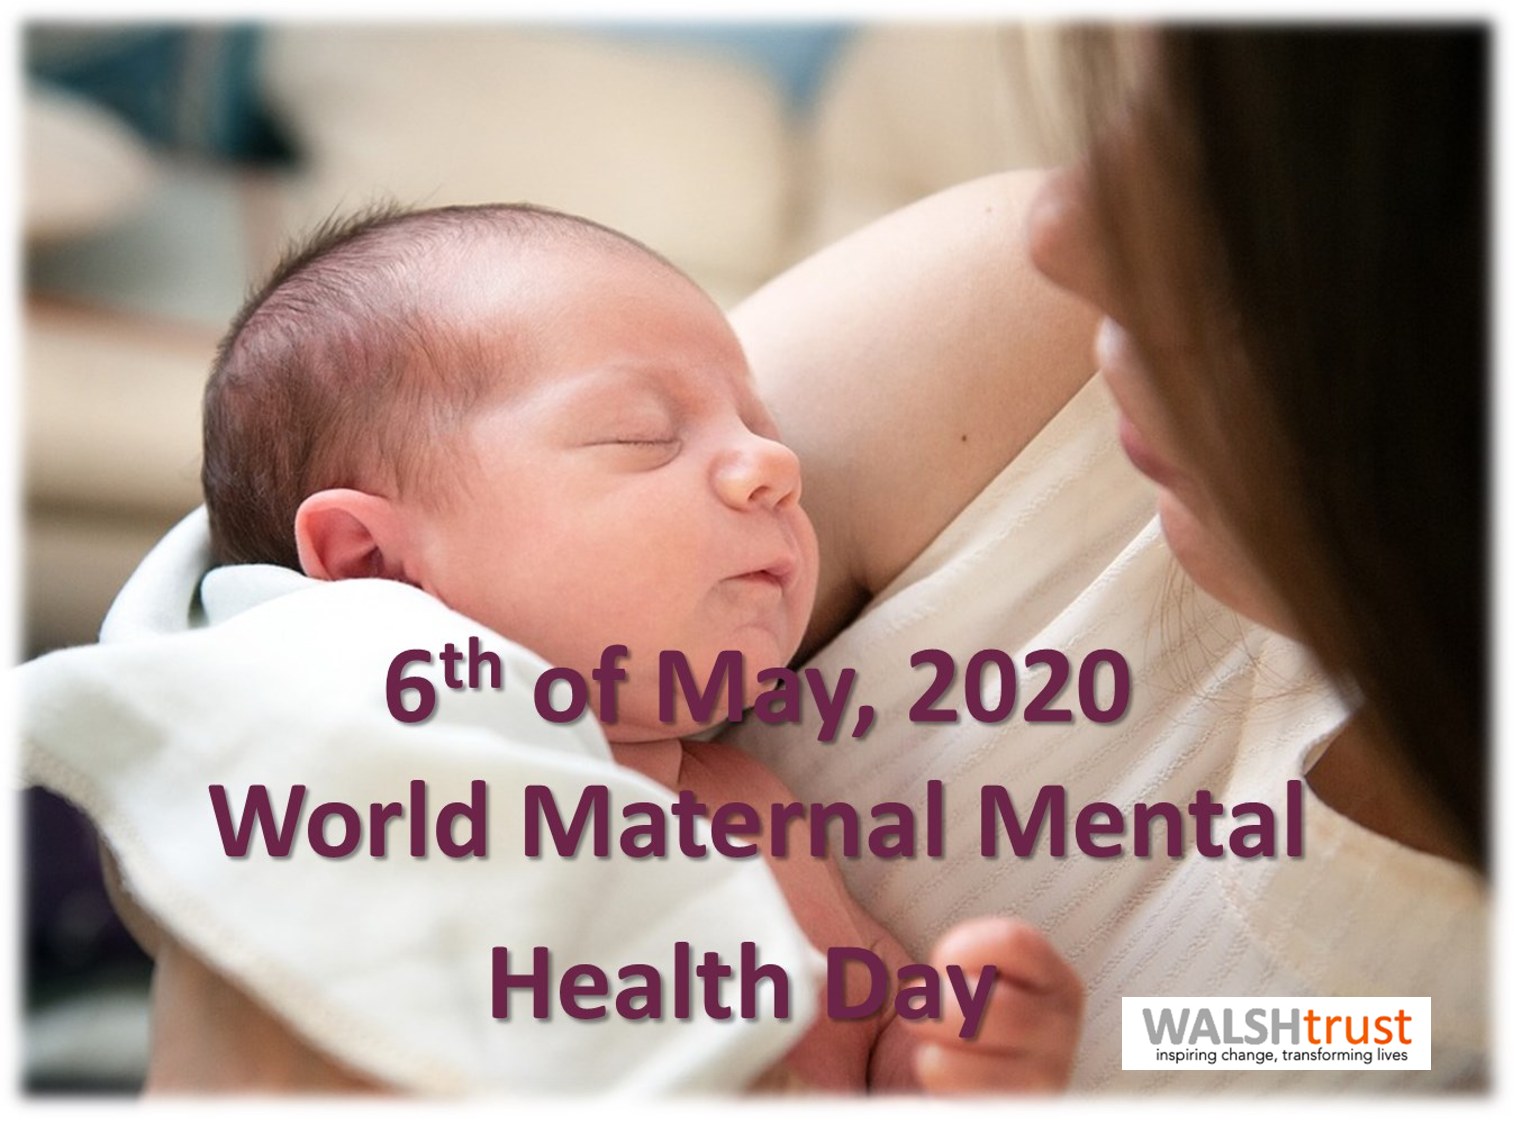 World Maternal Mental Health Day